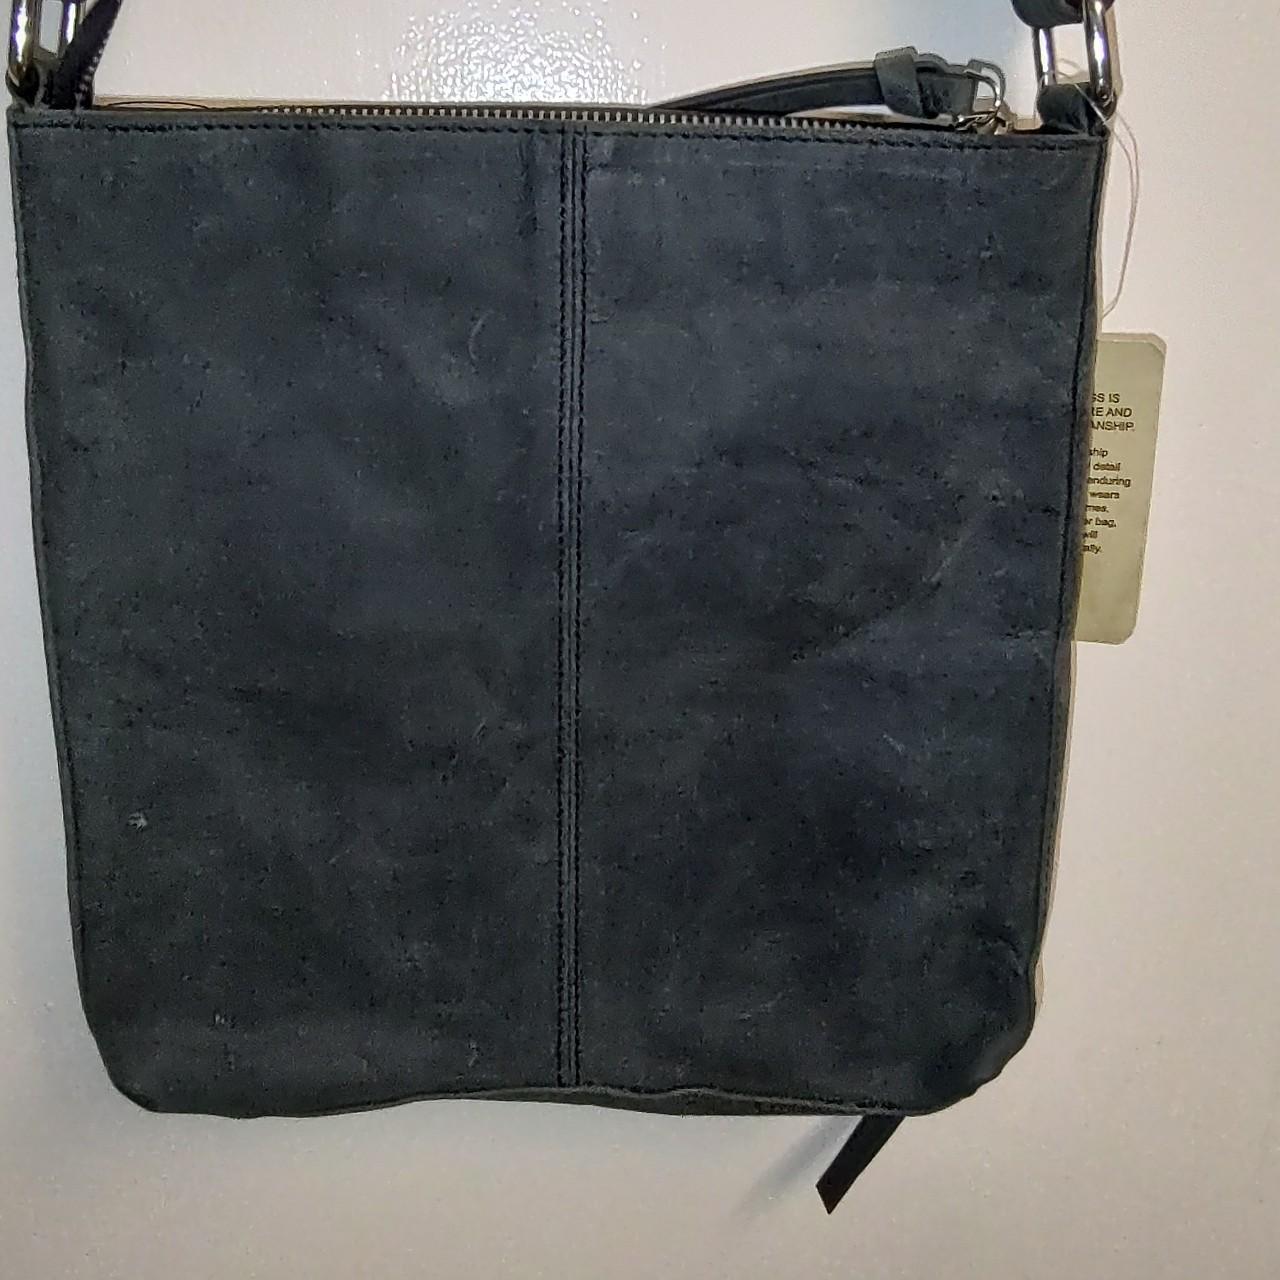 Estalon Women's Real Leather Crossbody Bag